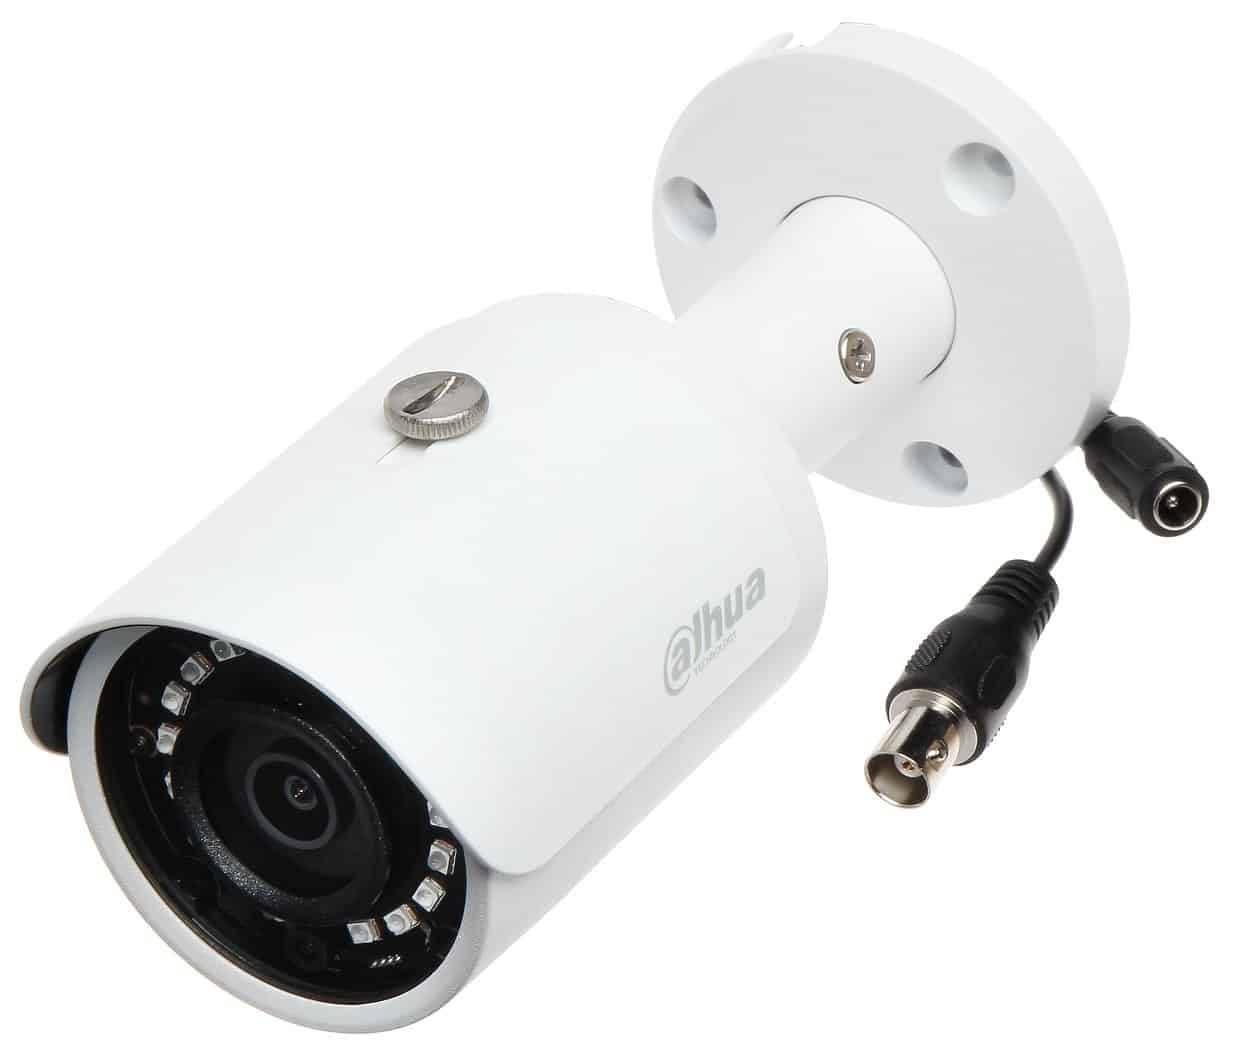 دوربین مداربسته آنالوگ داهوا مدل 1200spDahua 1200sp analog CCTV camera